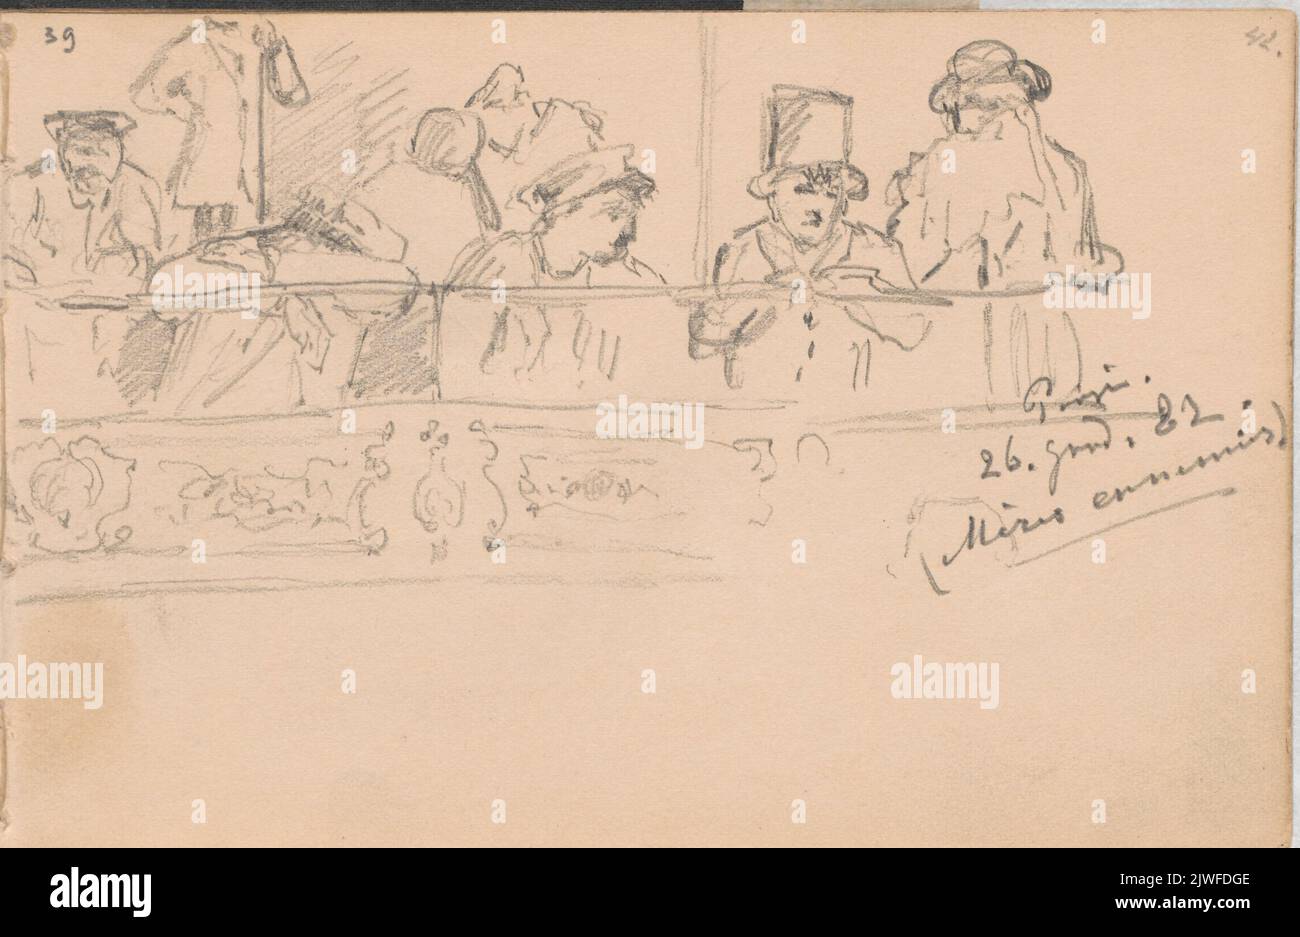 Scena w teatrze – publiczność na przedstawieniu sztuki Les meres ennemies Catulle’a Mendesa w Théâtre de l’Ambigu. Bilińska-Bohdanowiczowa, Anna (1854-1893), draughtsman, cartoonist Stock Photo